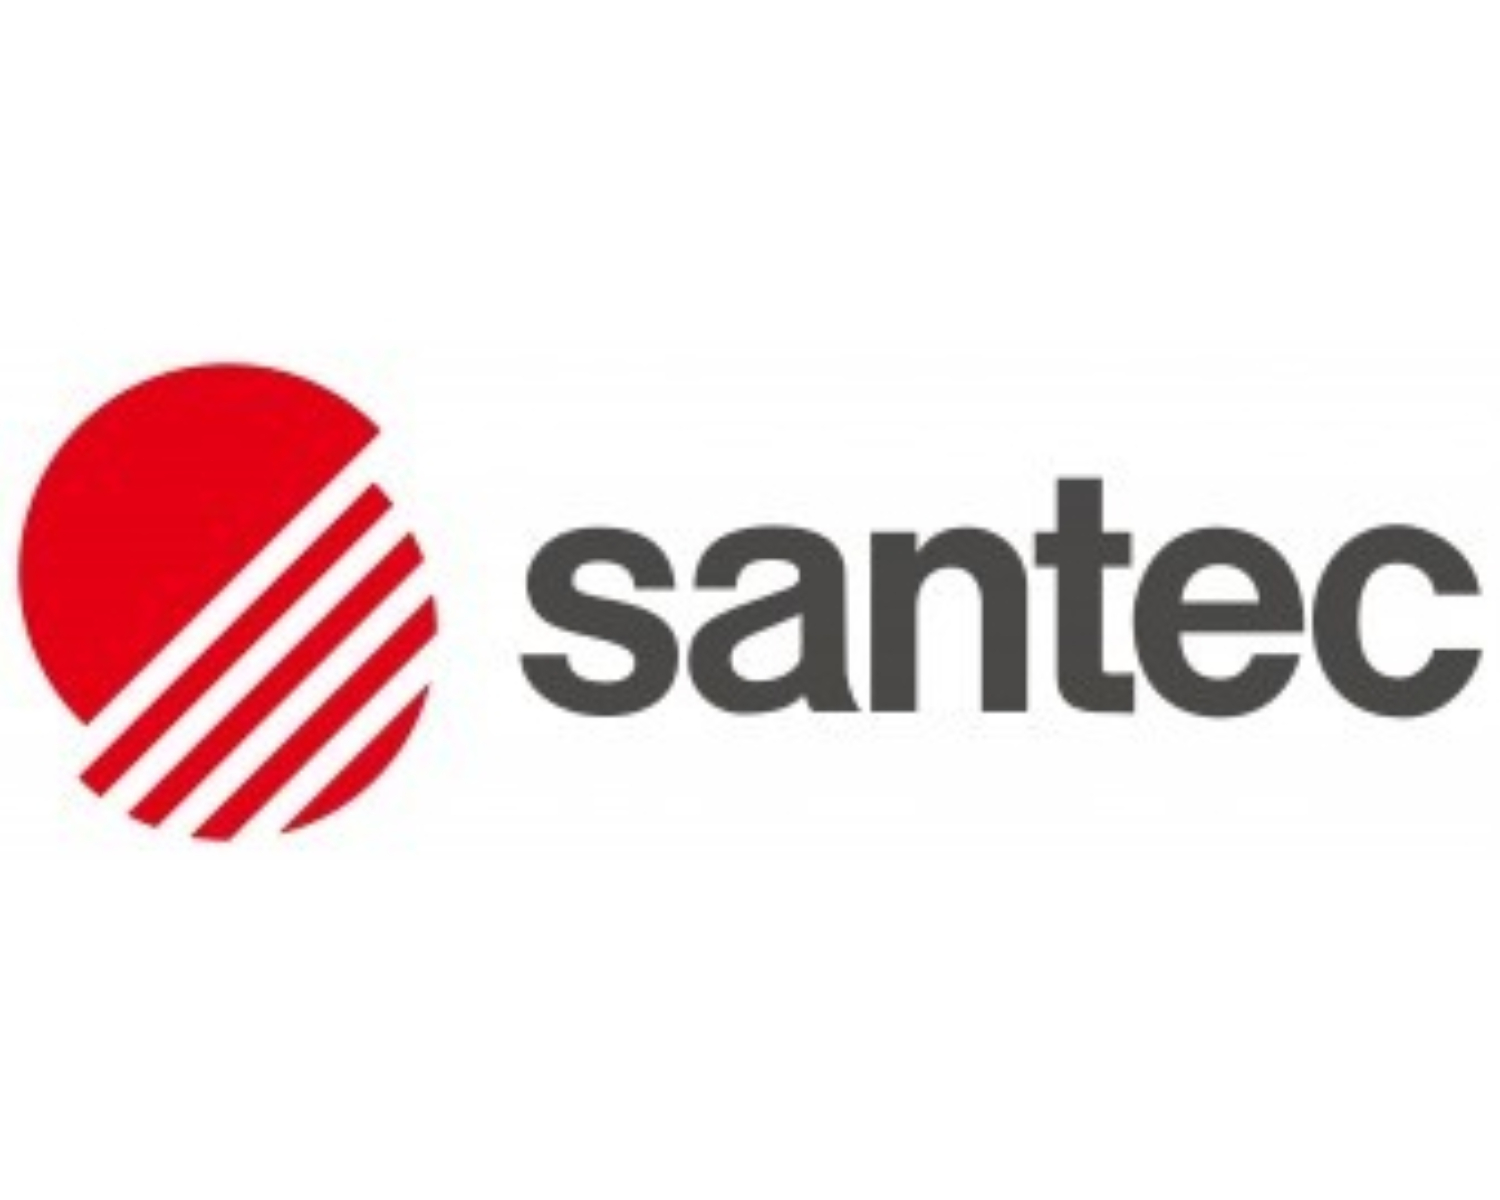 Santec Corporation